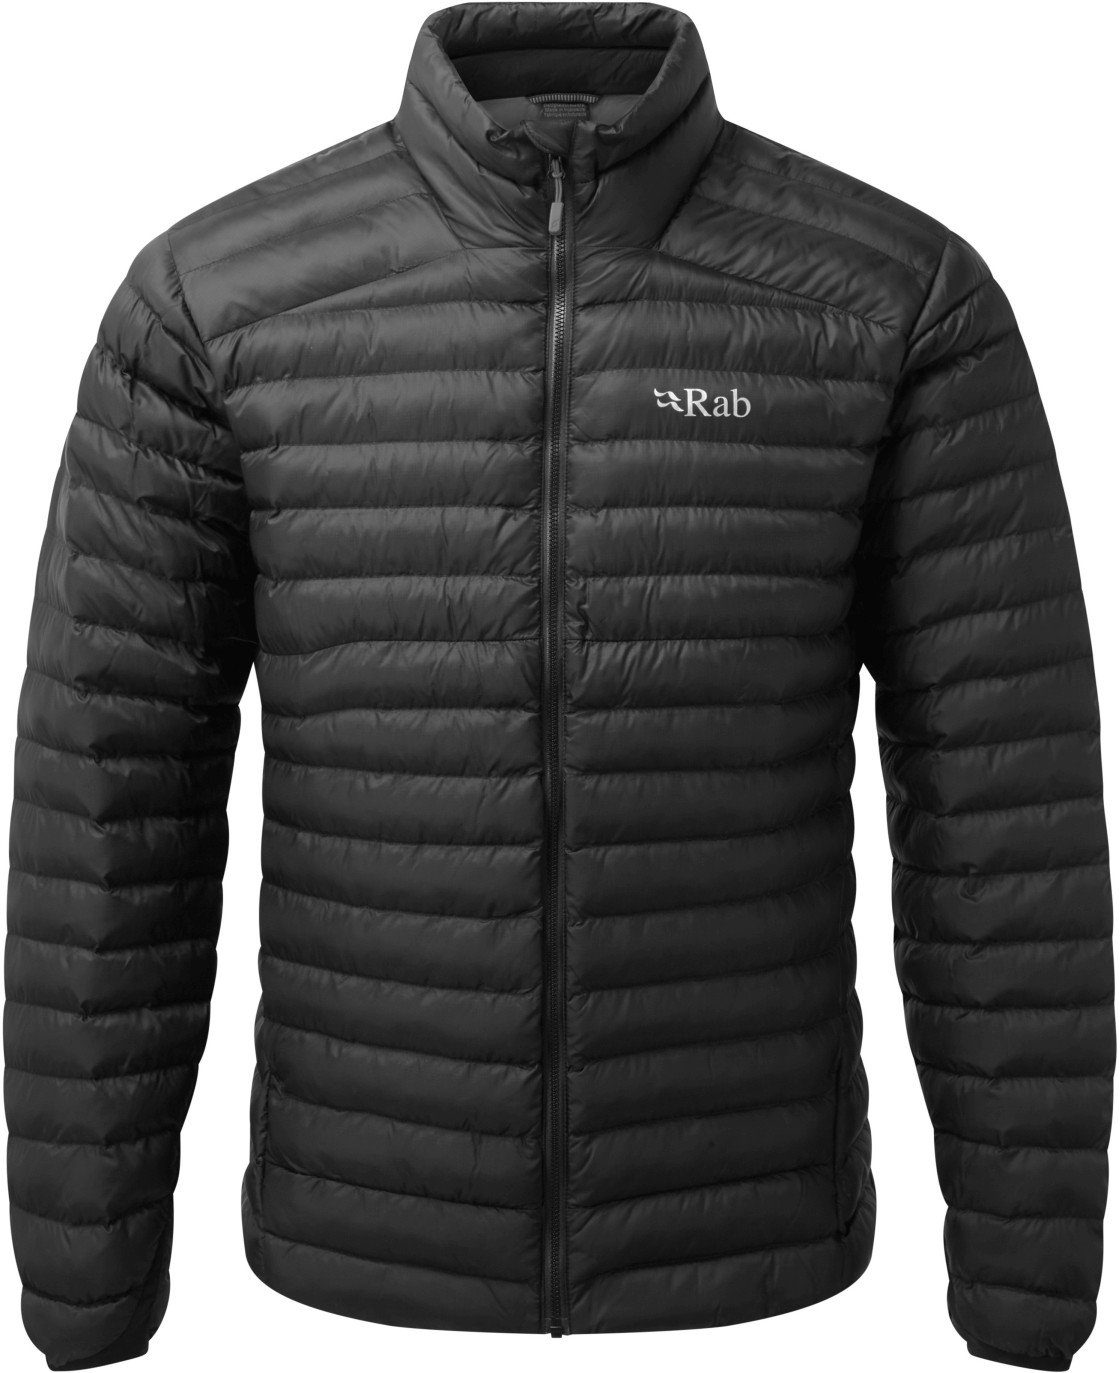 Winterjacke Cirrus Rab Jacket black